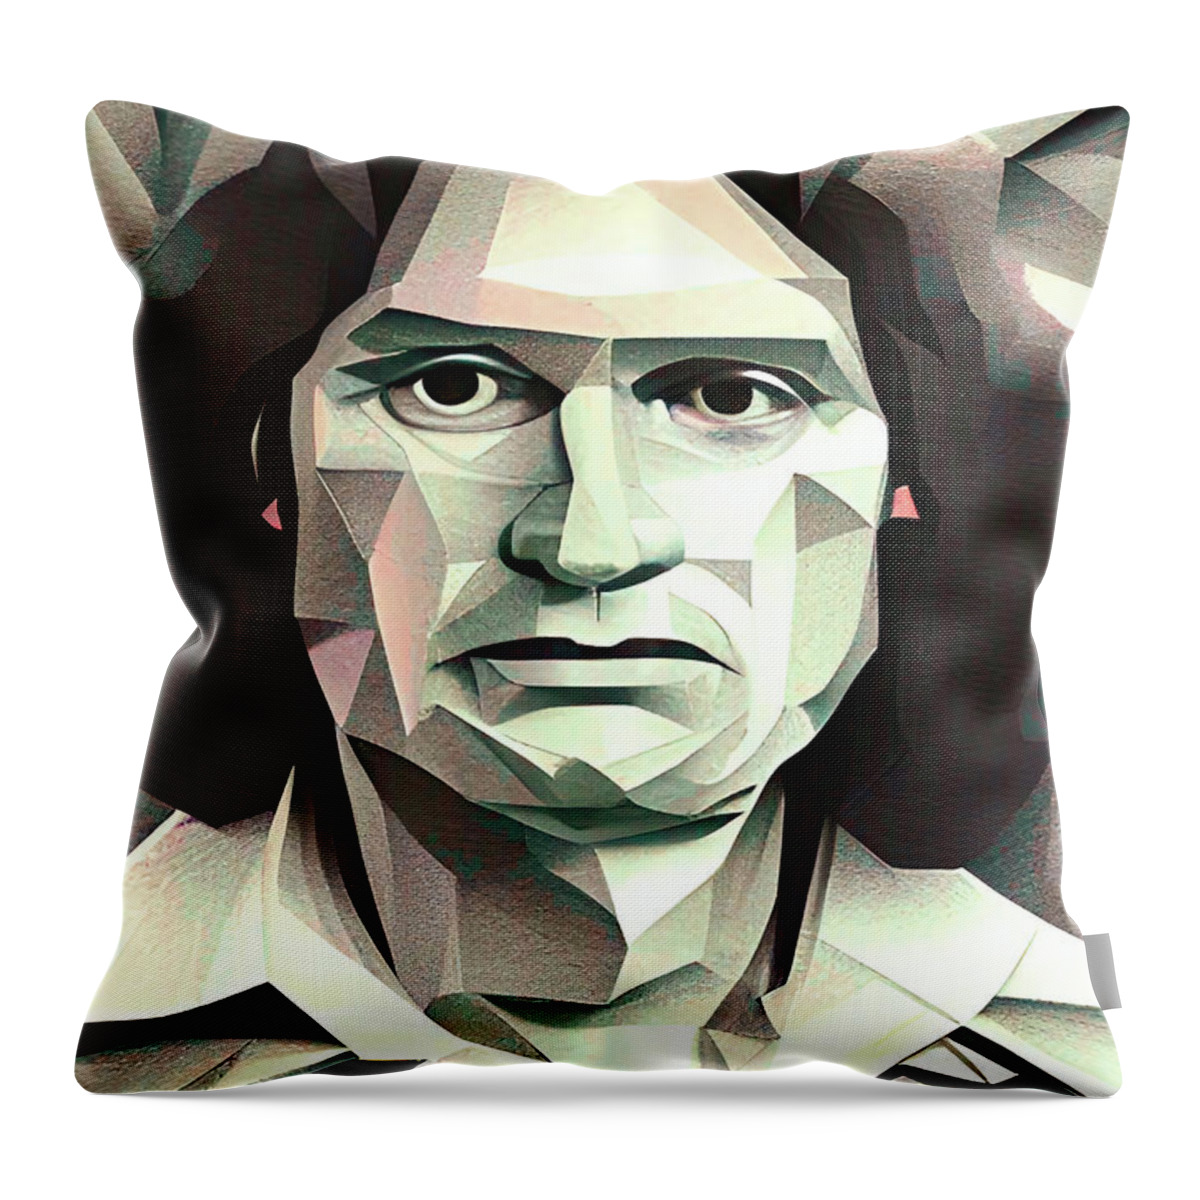 Rodney Alcala Throw Pillow featuring the digital art Criminal Rodney Alcala geometric portrait by Christina Fairhead